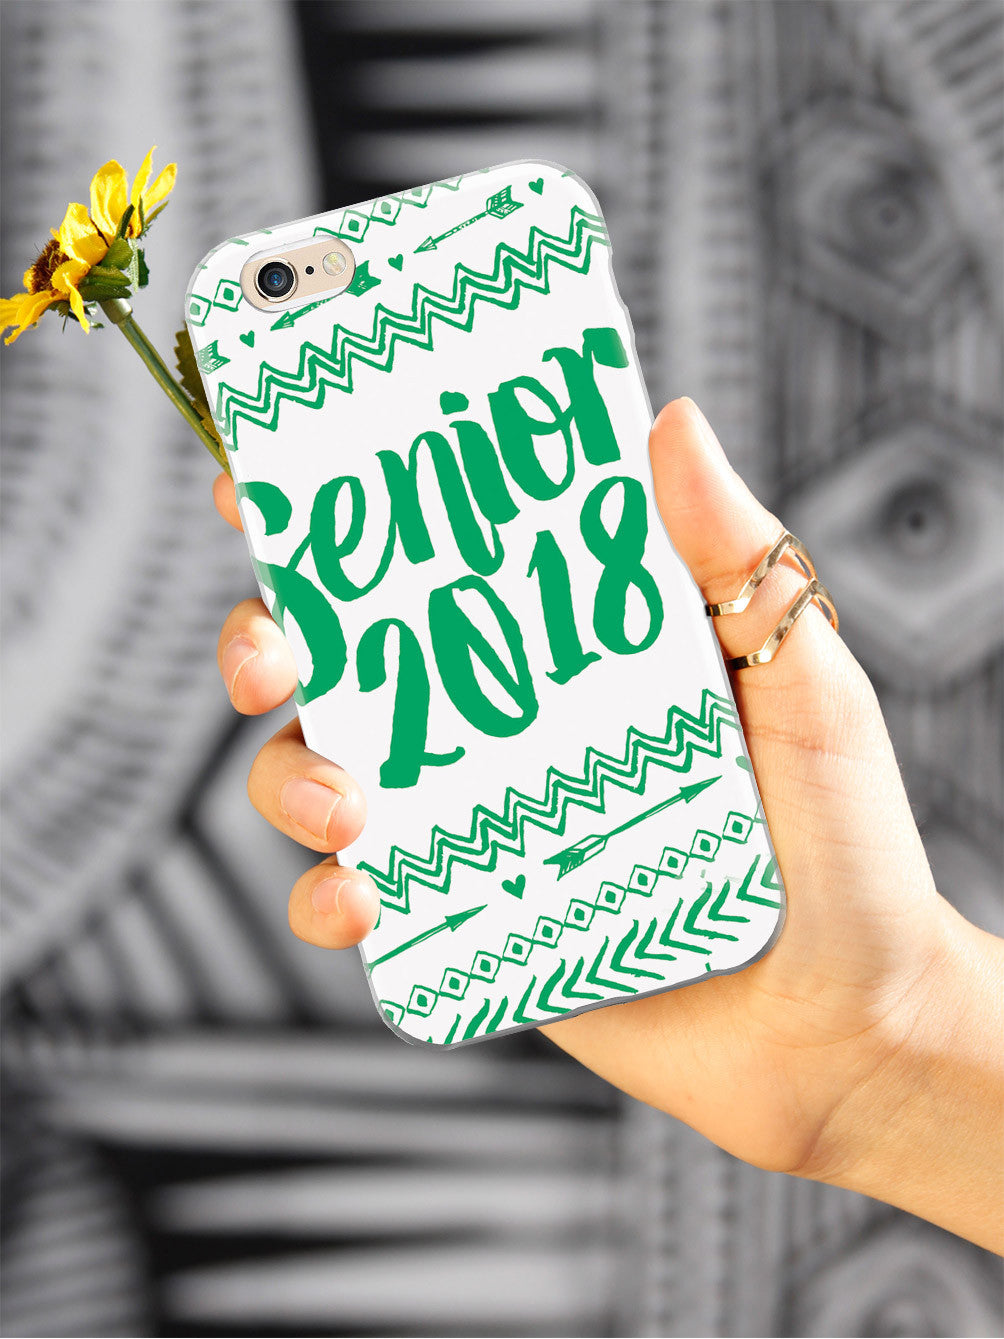 Senior 2018 - Green Case